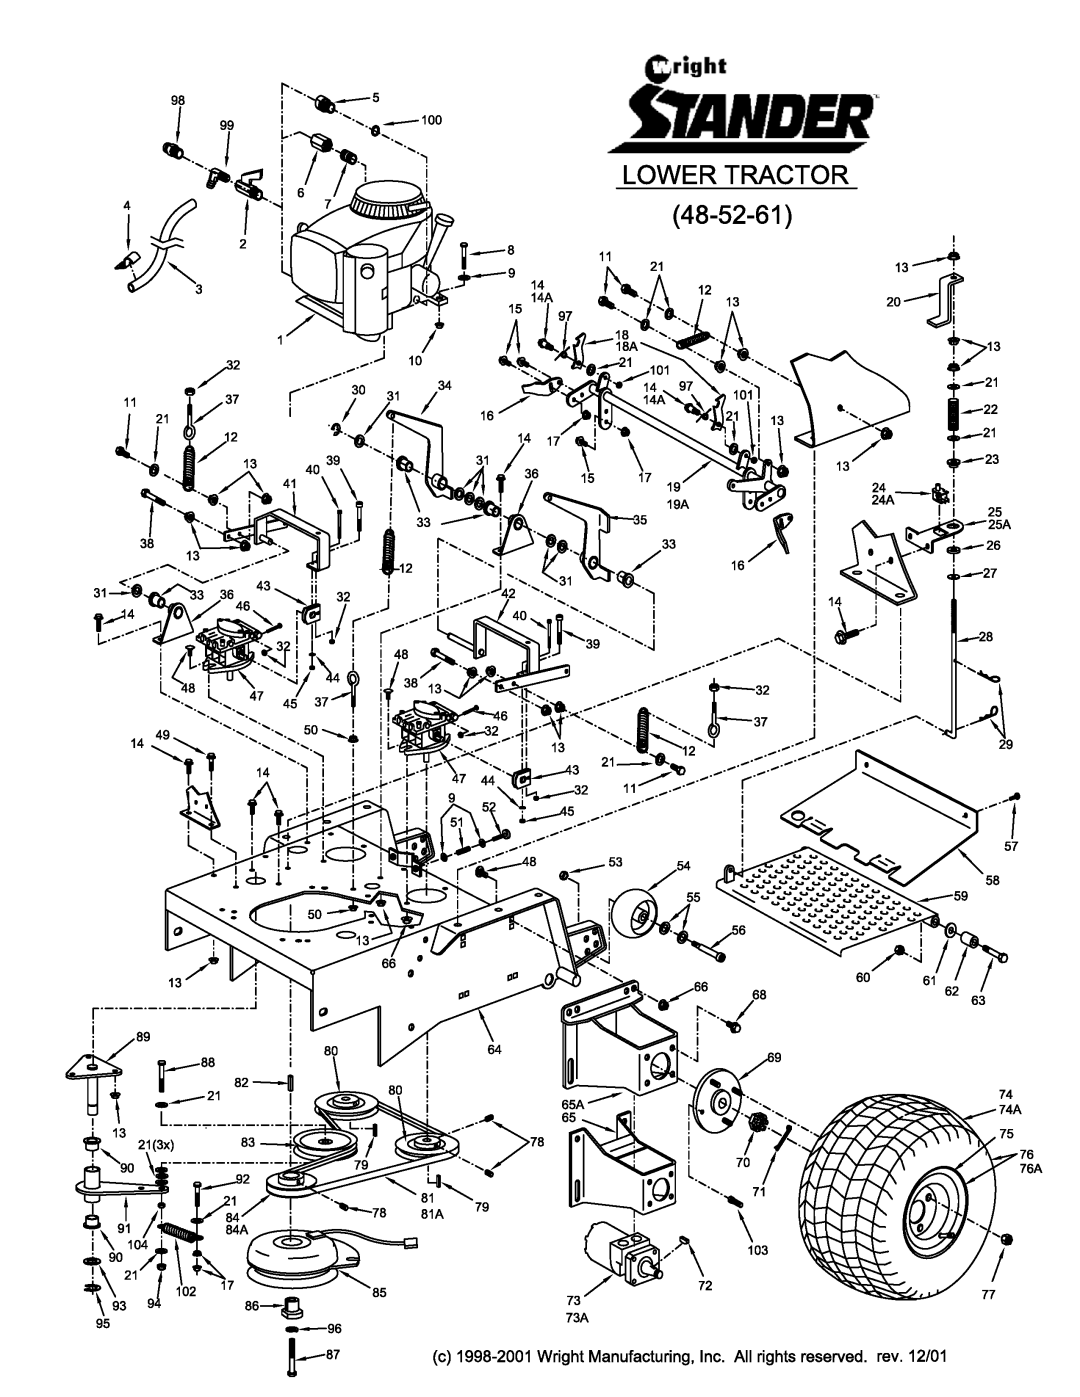 Wright Manufacturing 61, 52, 48 manual 